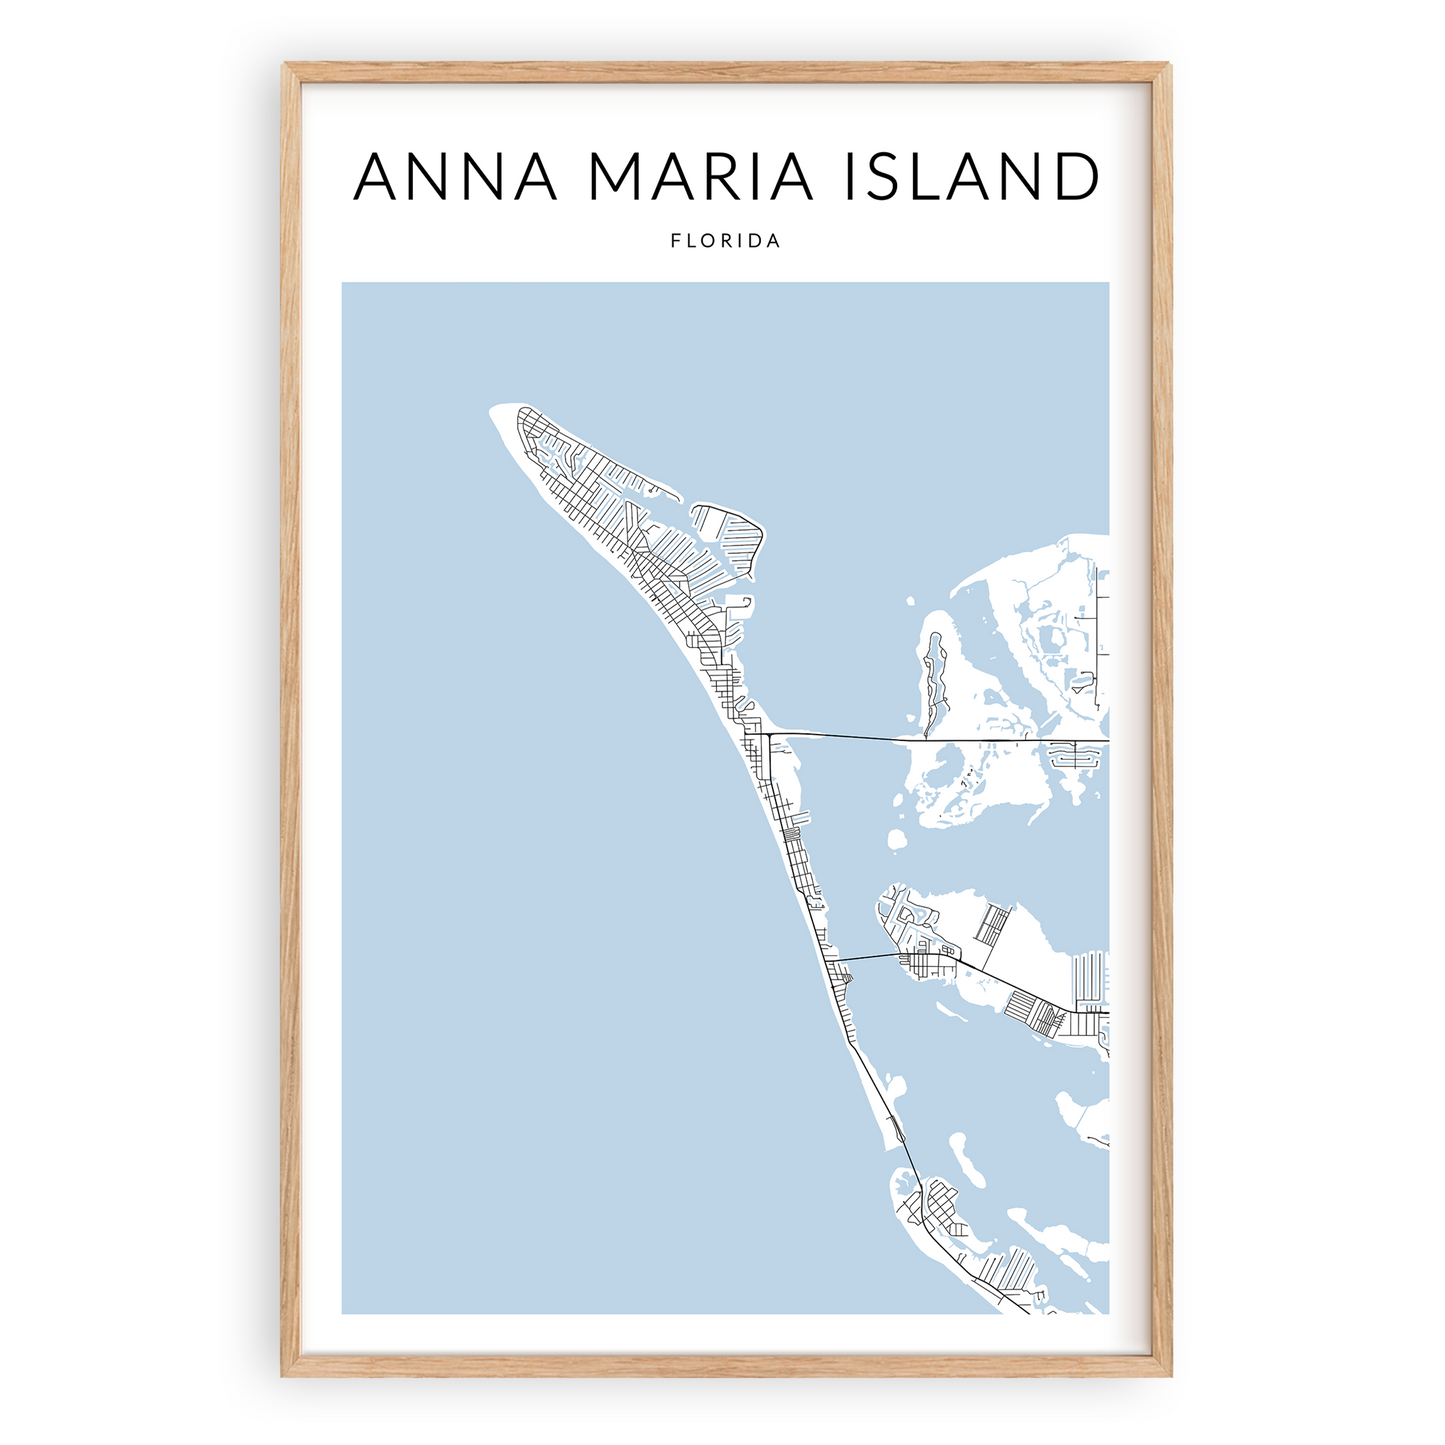 anna maria island florida in wood frame